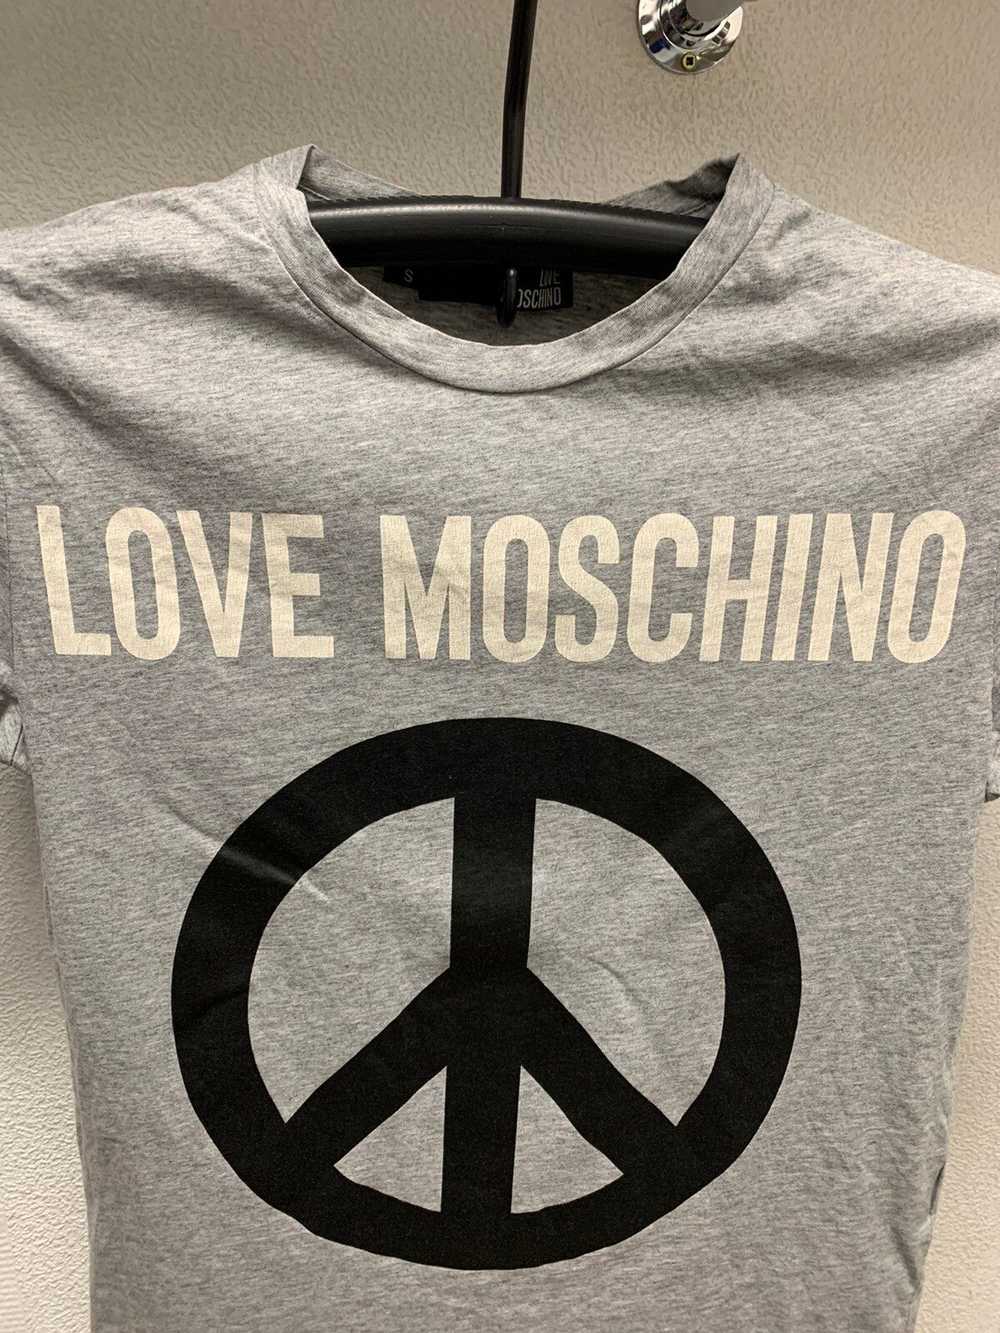 Moschino Love moschino big logo grey t-shirt S sz - image 3